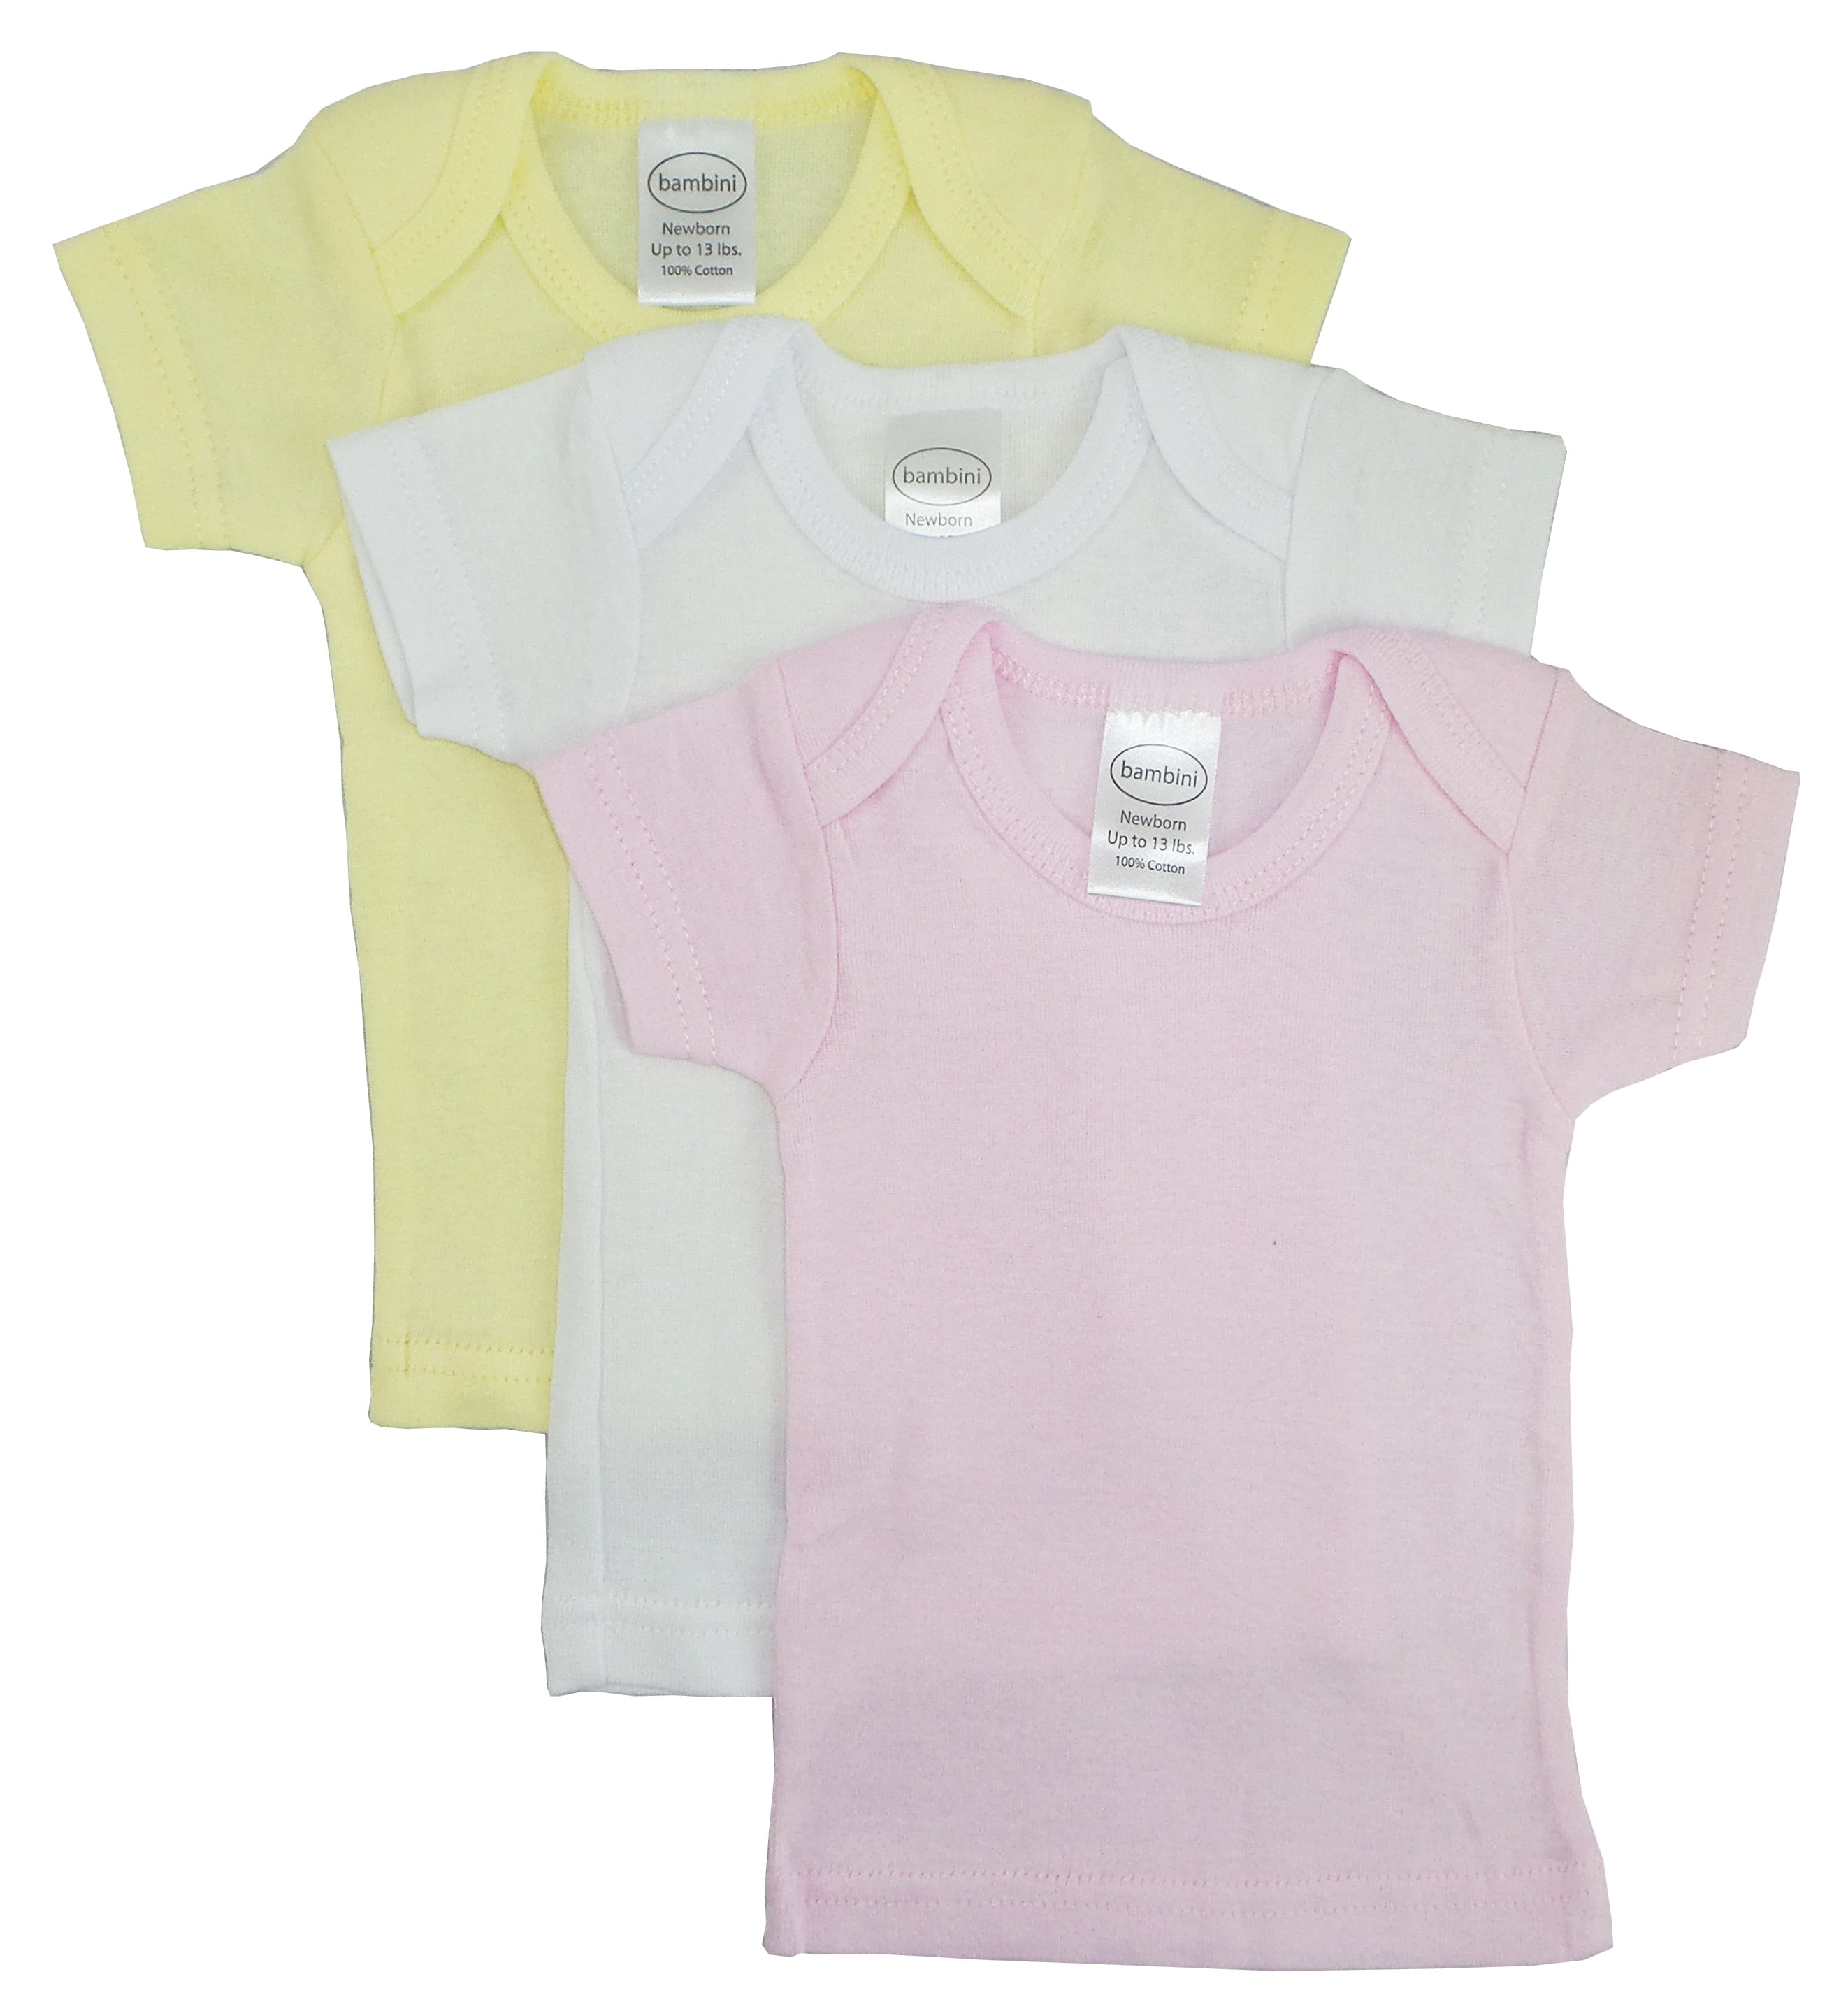 AiguanRabbits Love Toddler/Infant Short Sleeve Cotton T Shirts White 43